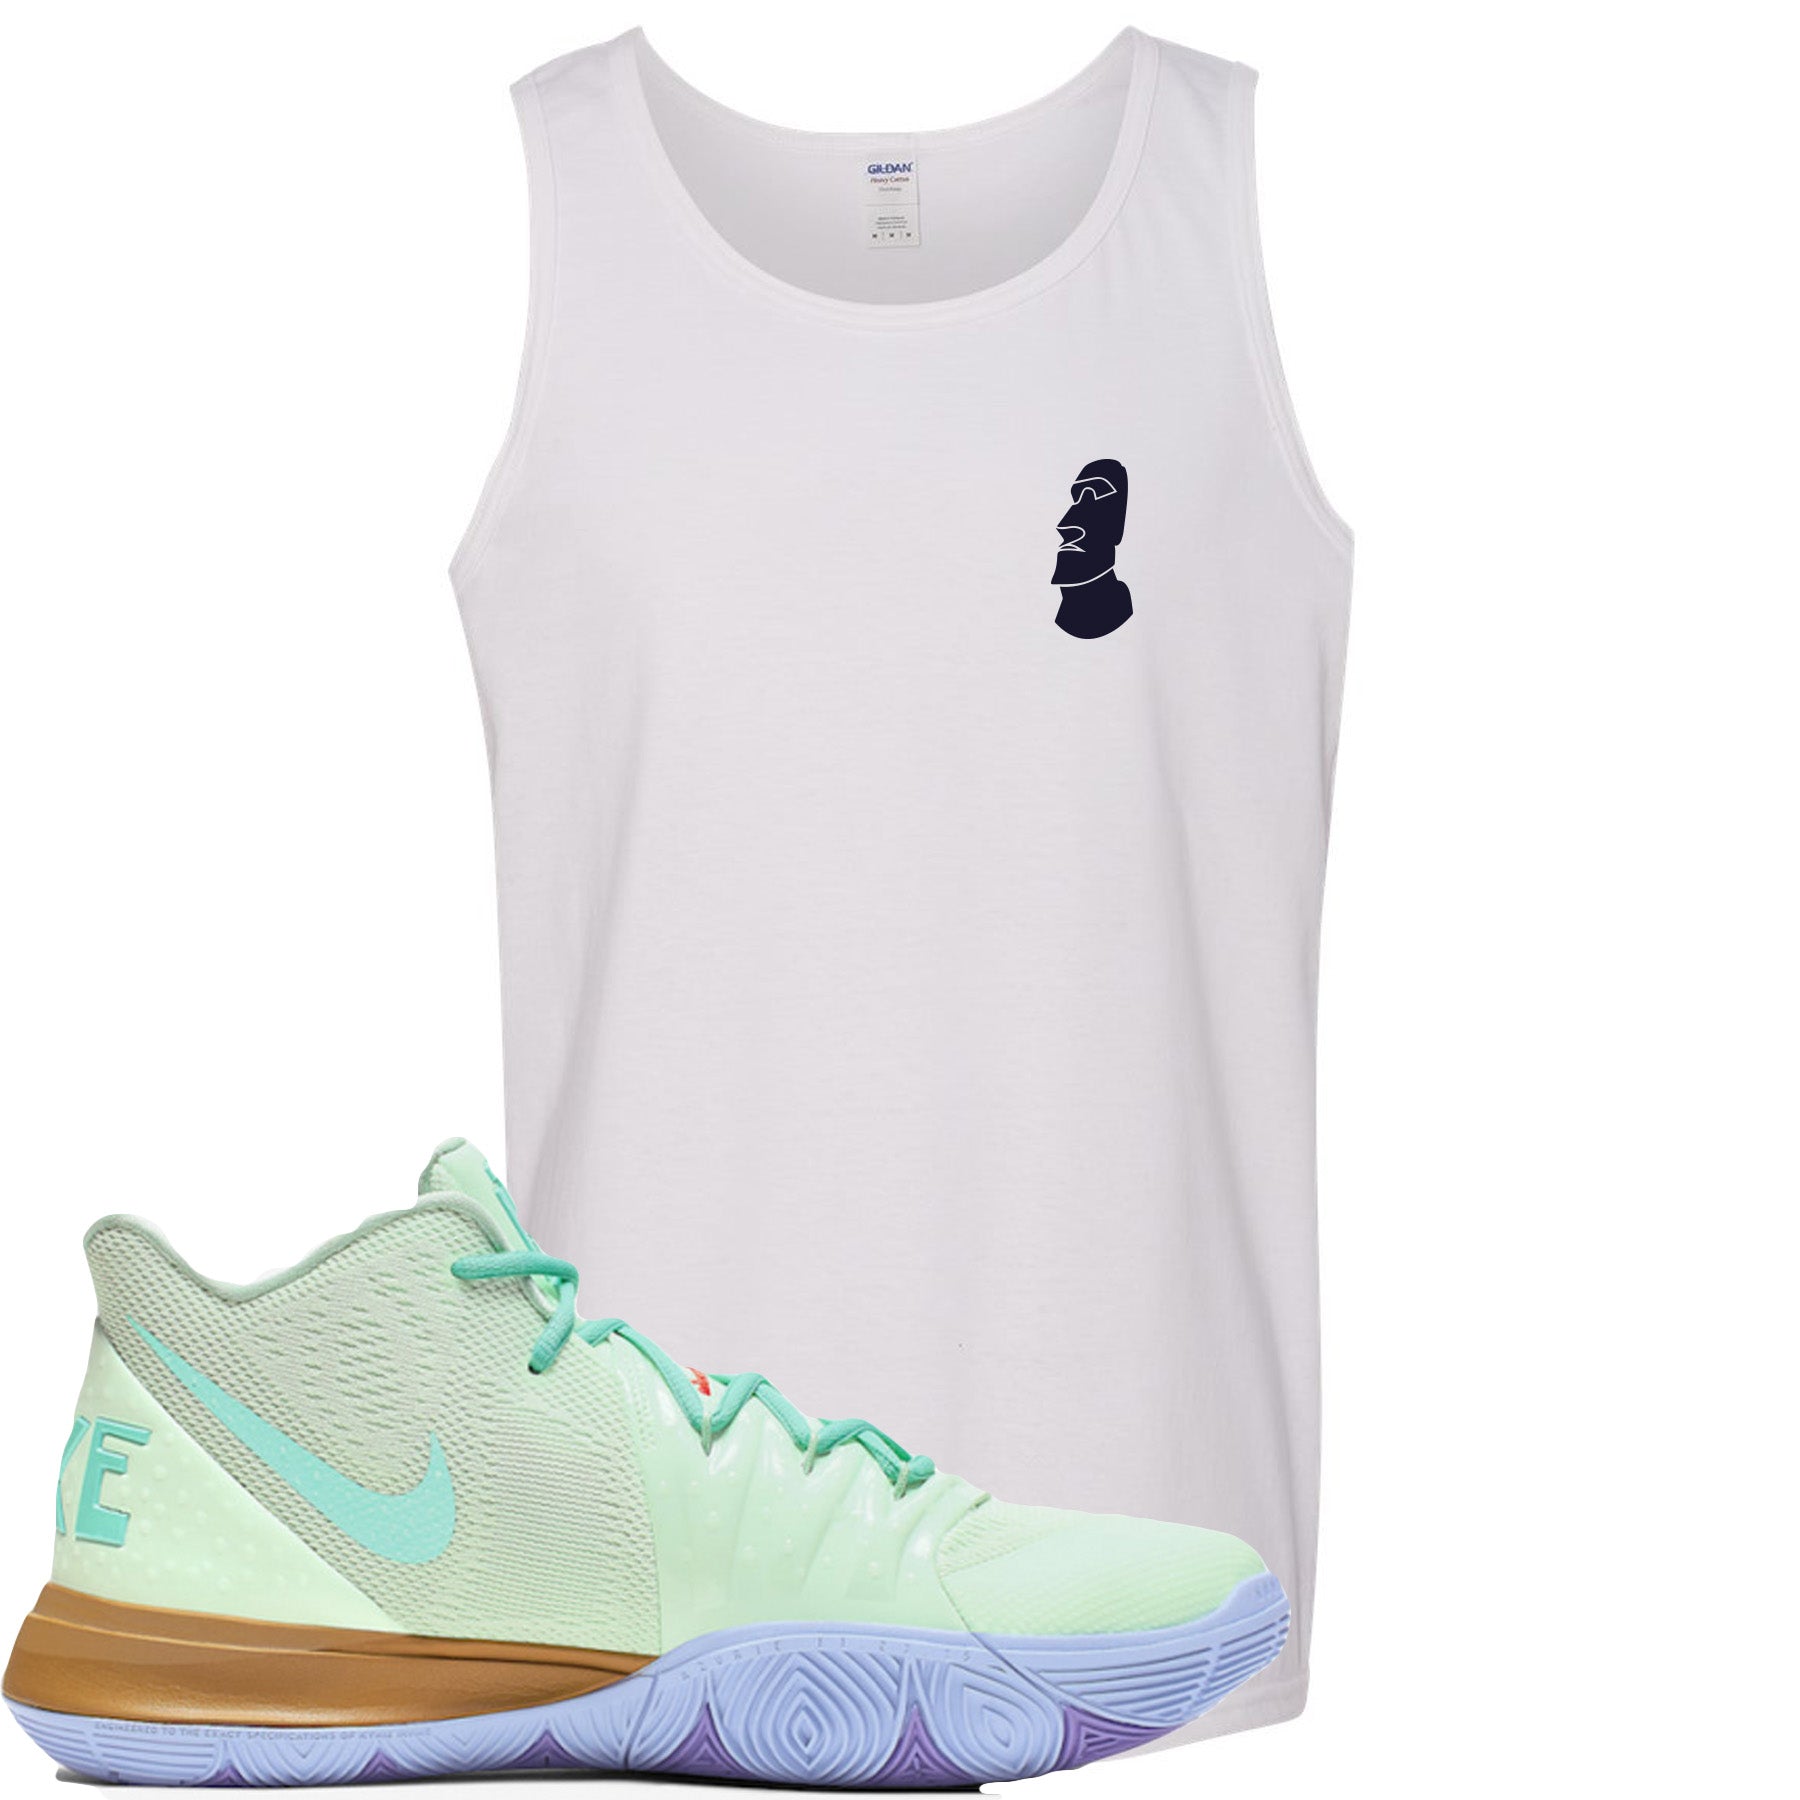 Buy Nike Kyrie 5 KSF 'Keep Sue Fresh' Shoes Size 14 at Goxip